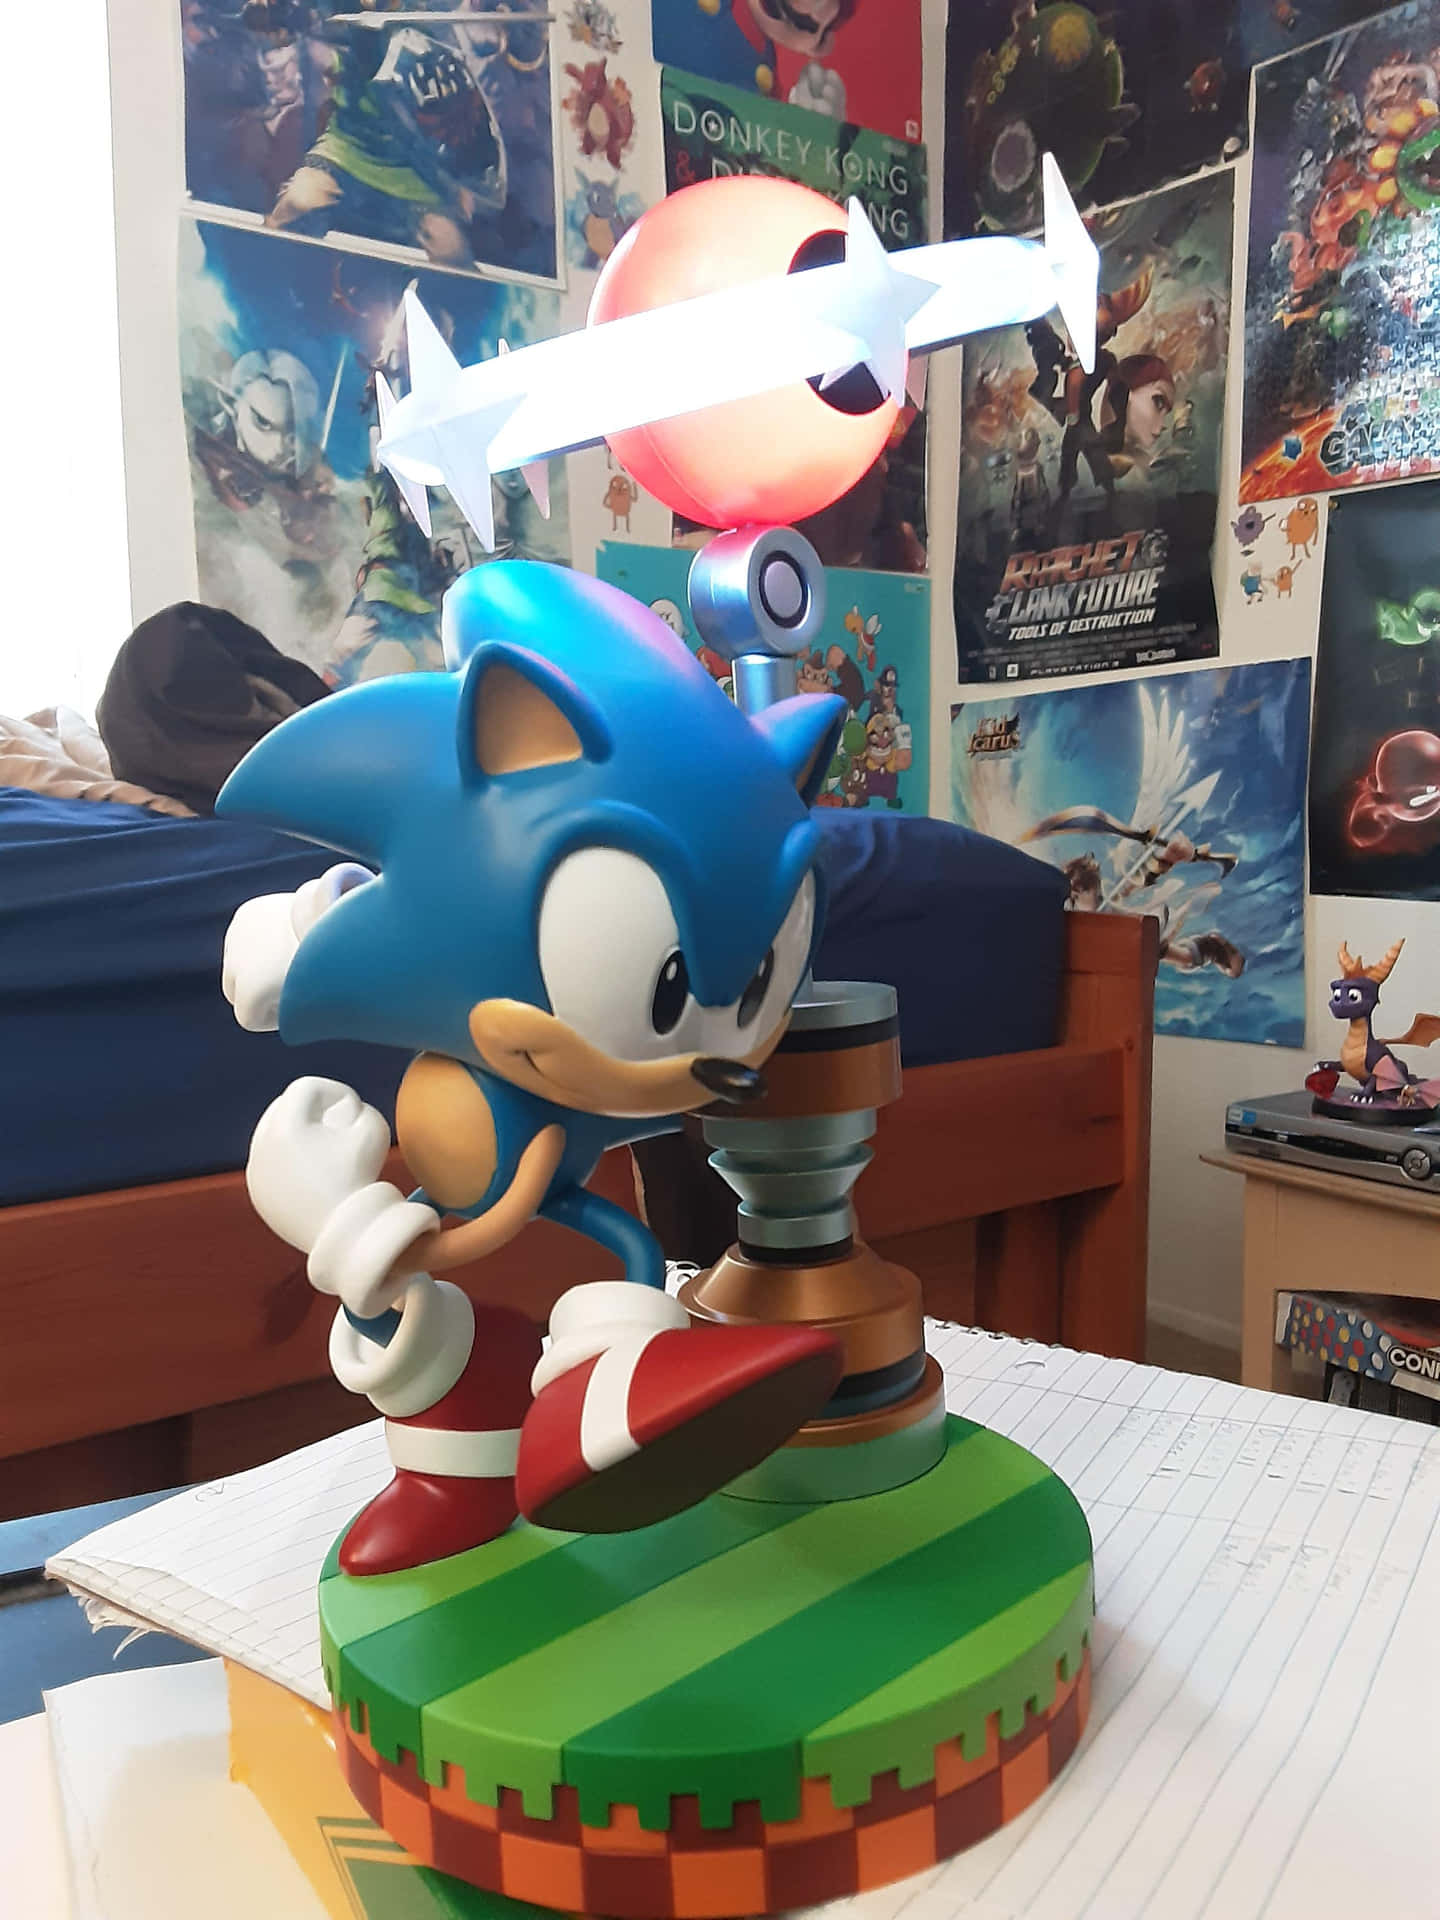 Sonic The Hedgehog showcasing his speed